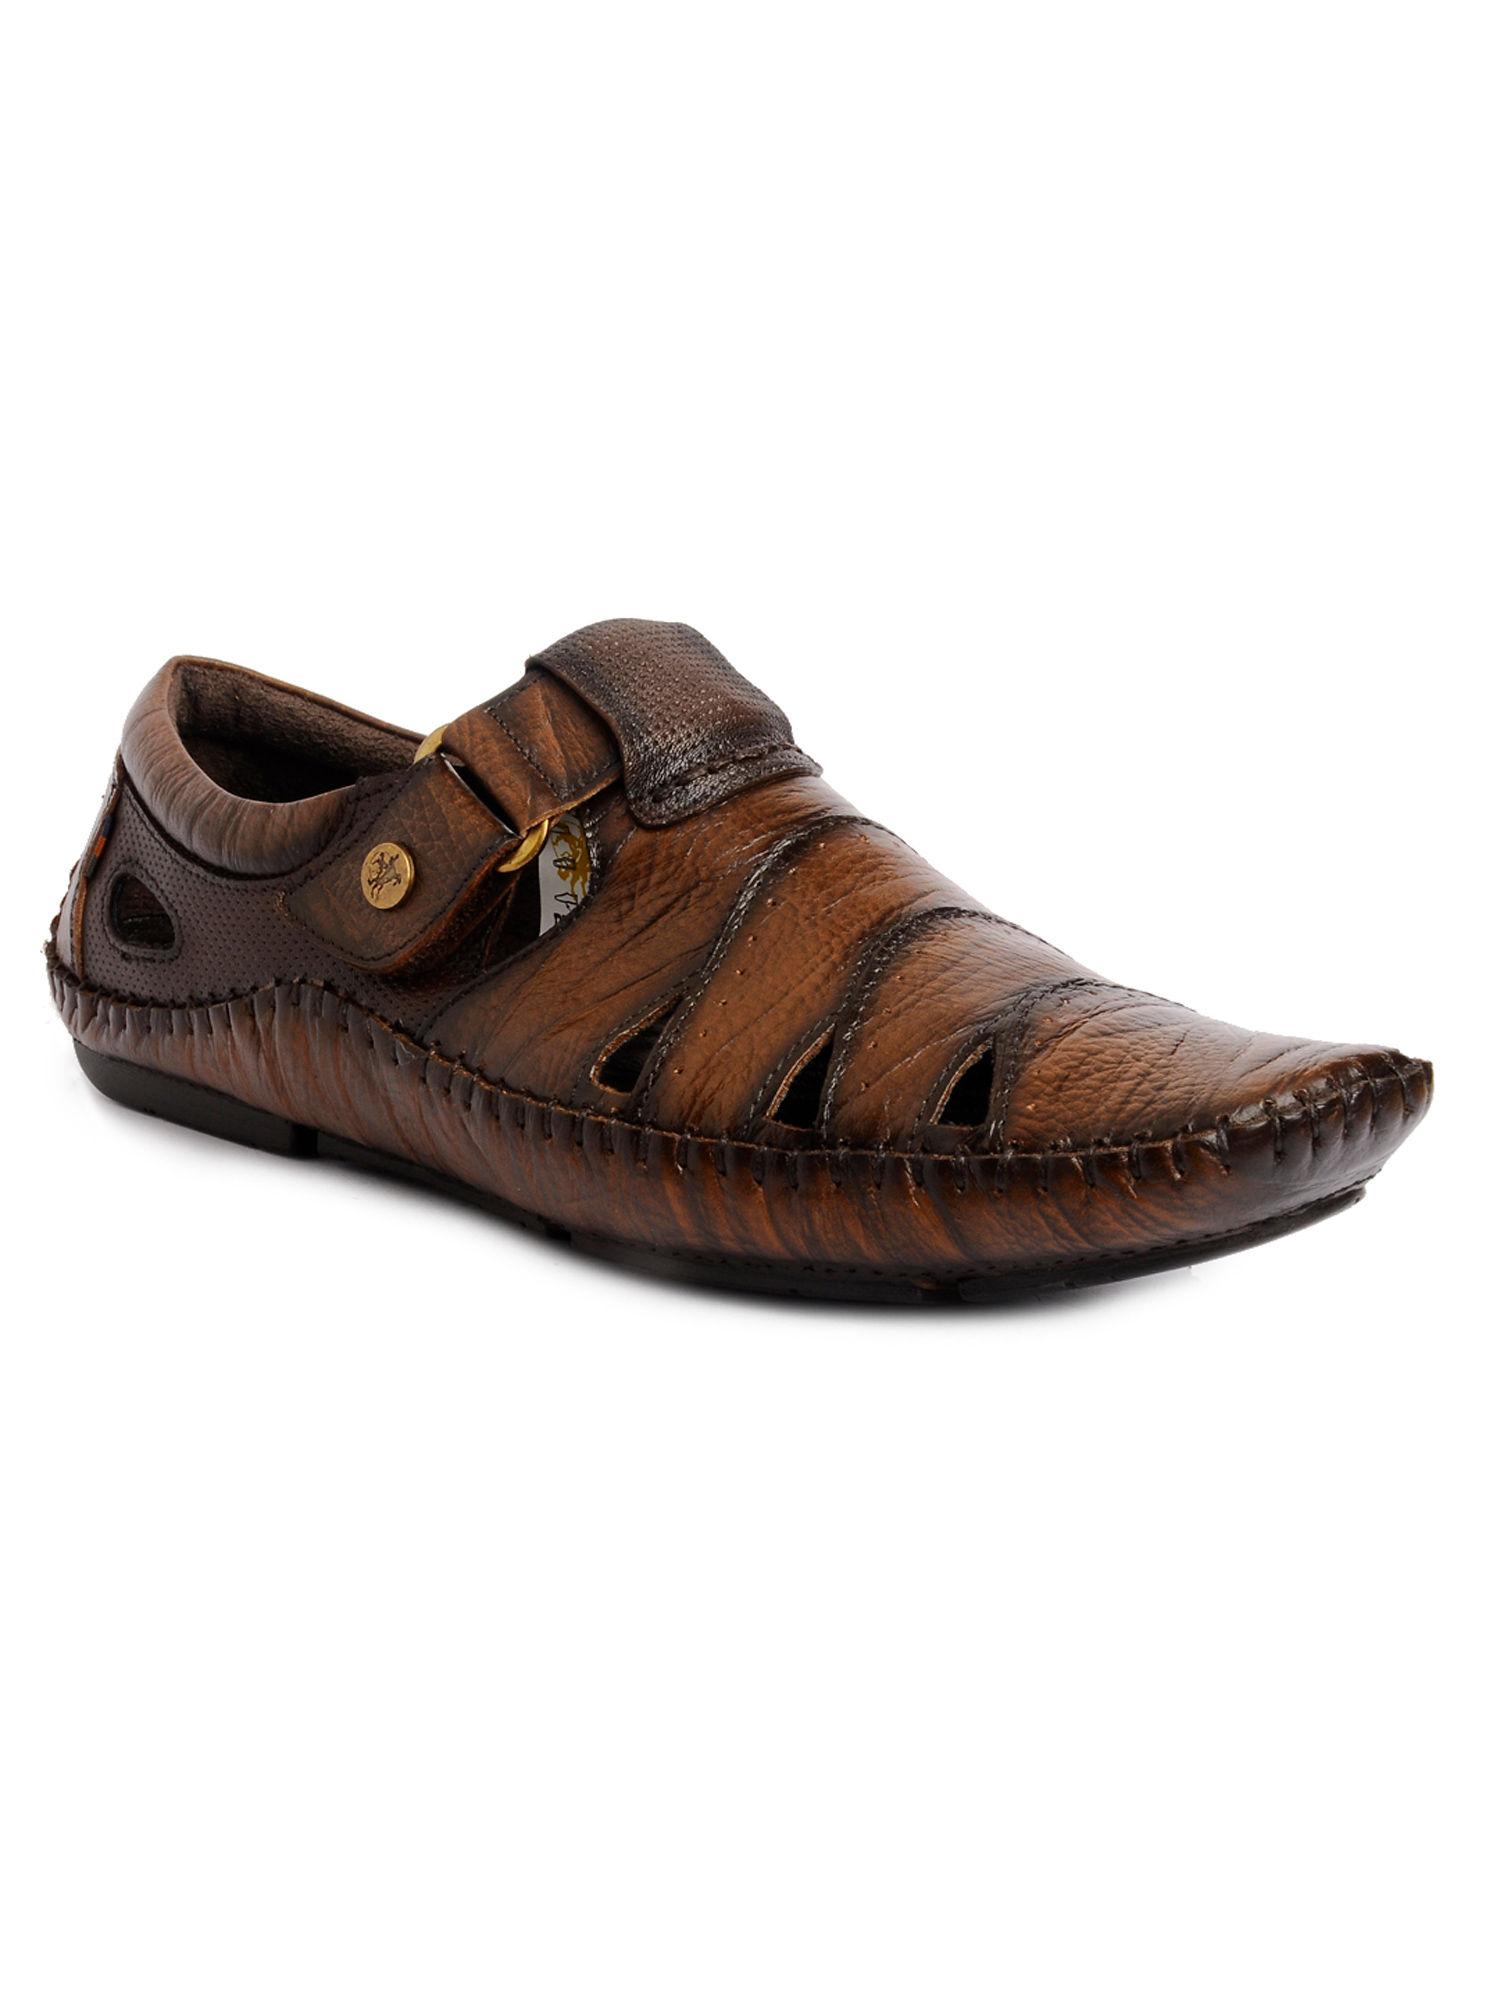 mens carlin nx genuine leather tan casual closed sandals